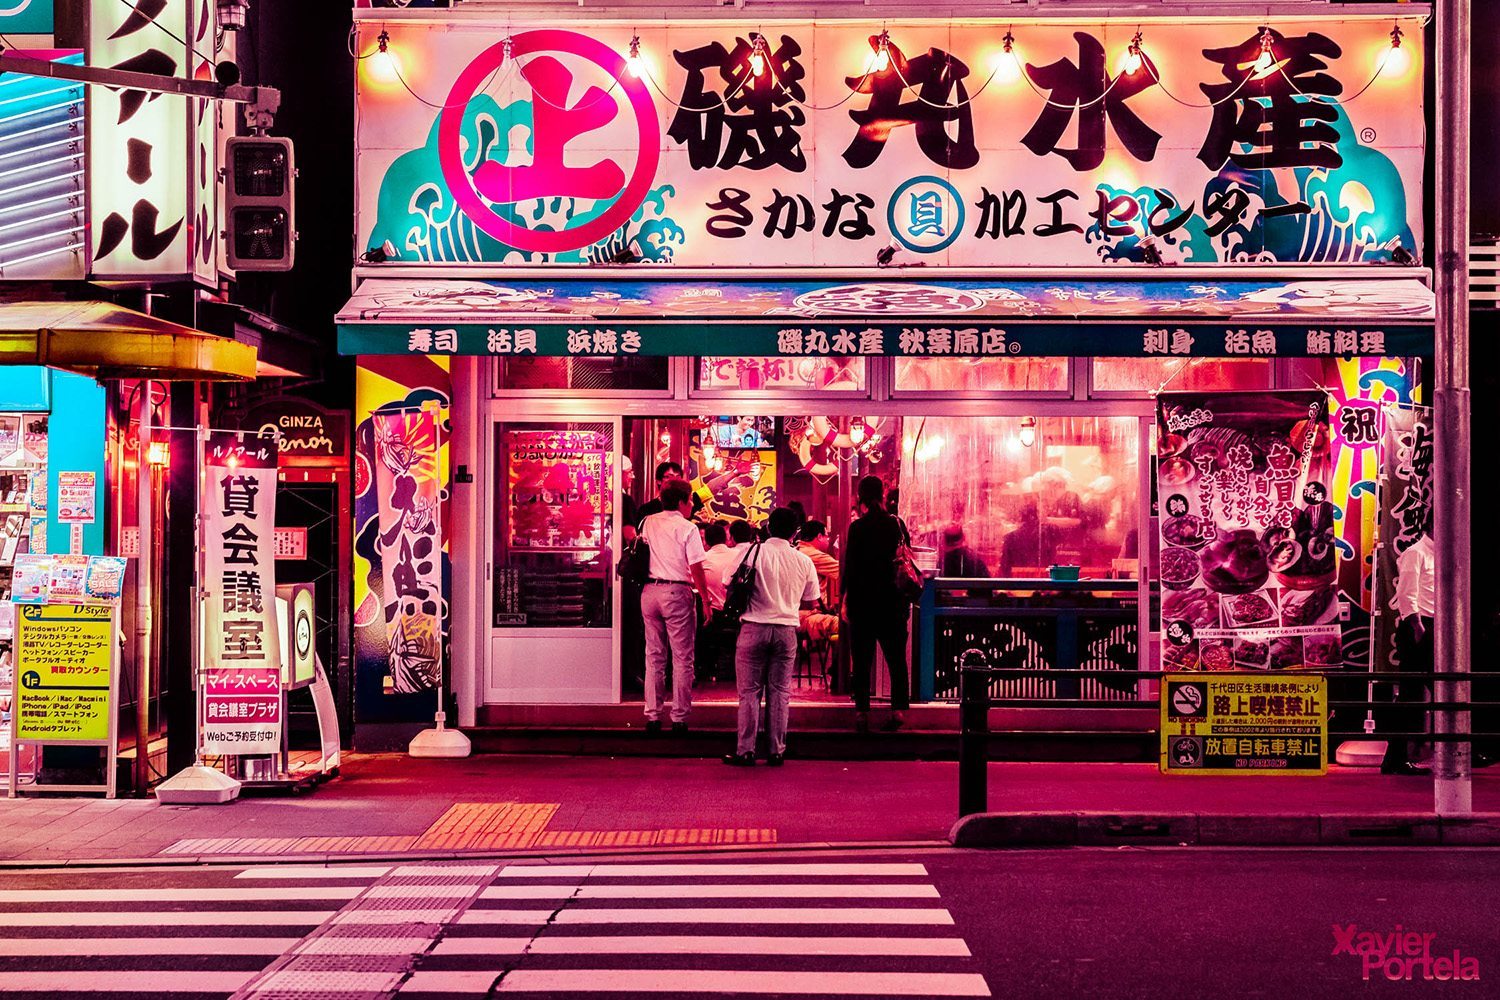 Tokyo's glow xavier portela rose_14